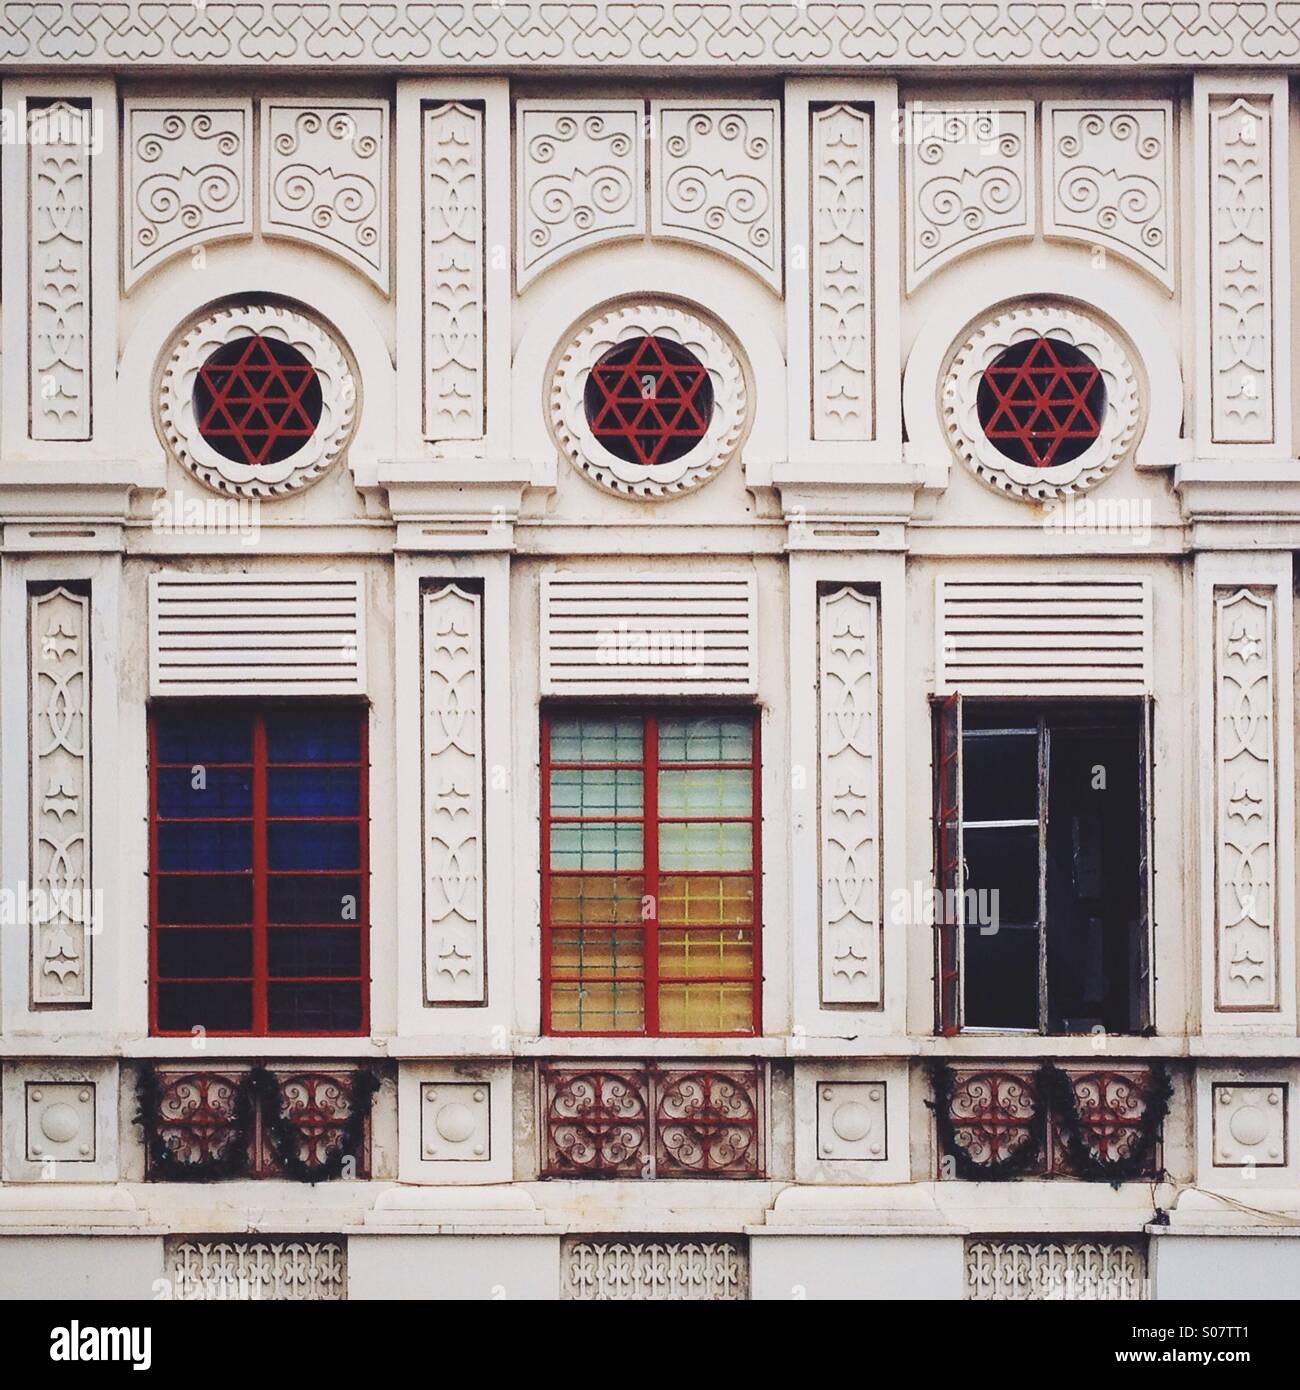 Ornate decorative facade of building in Intramuros historic district, Metro Manila, Philippines Stock Photo